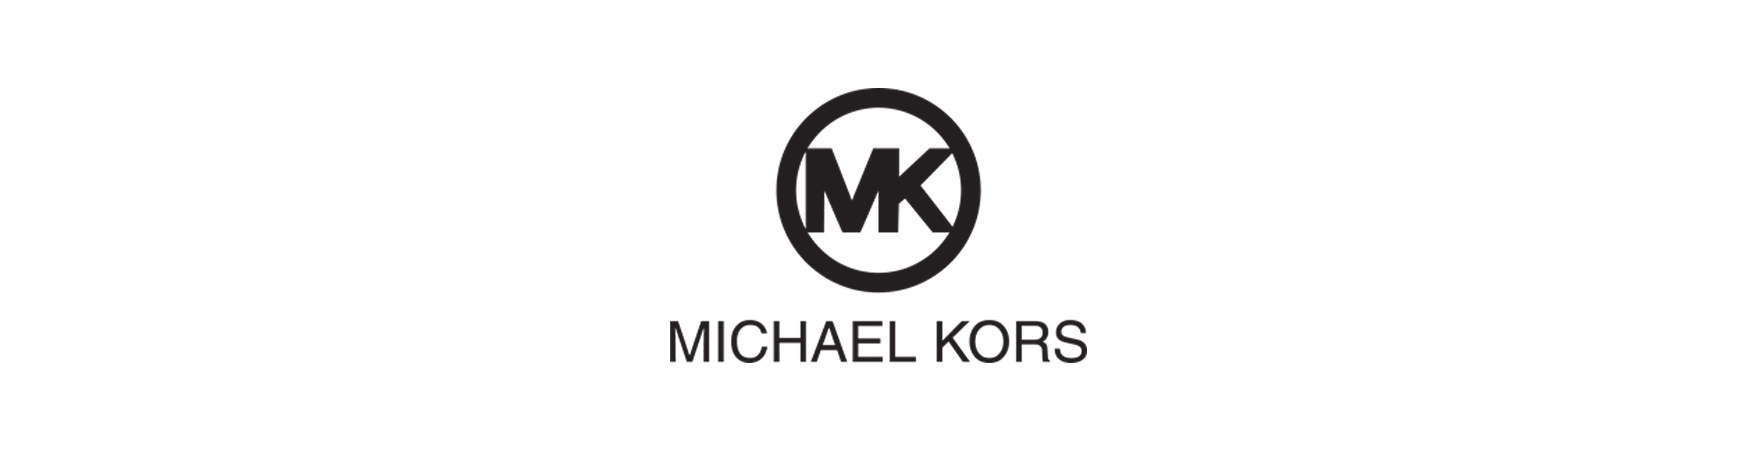 Boutiqaat: Buy Michael Kors Products Online for Women in Kuwait